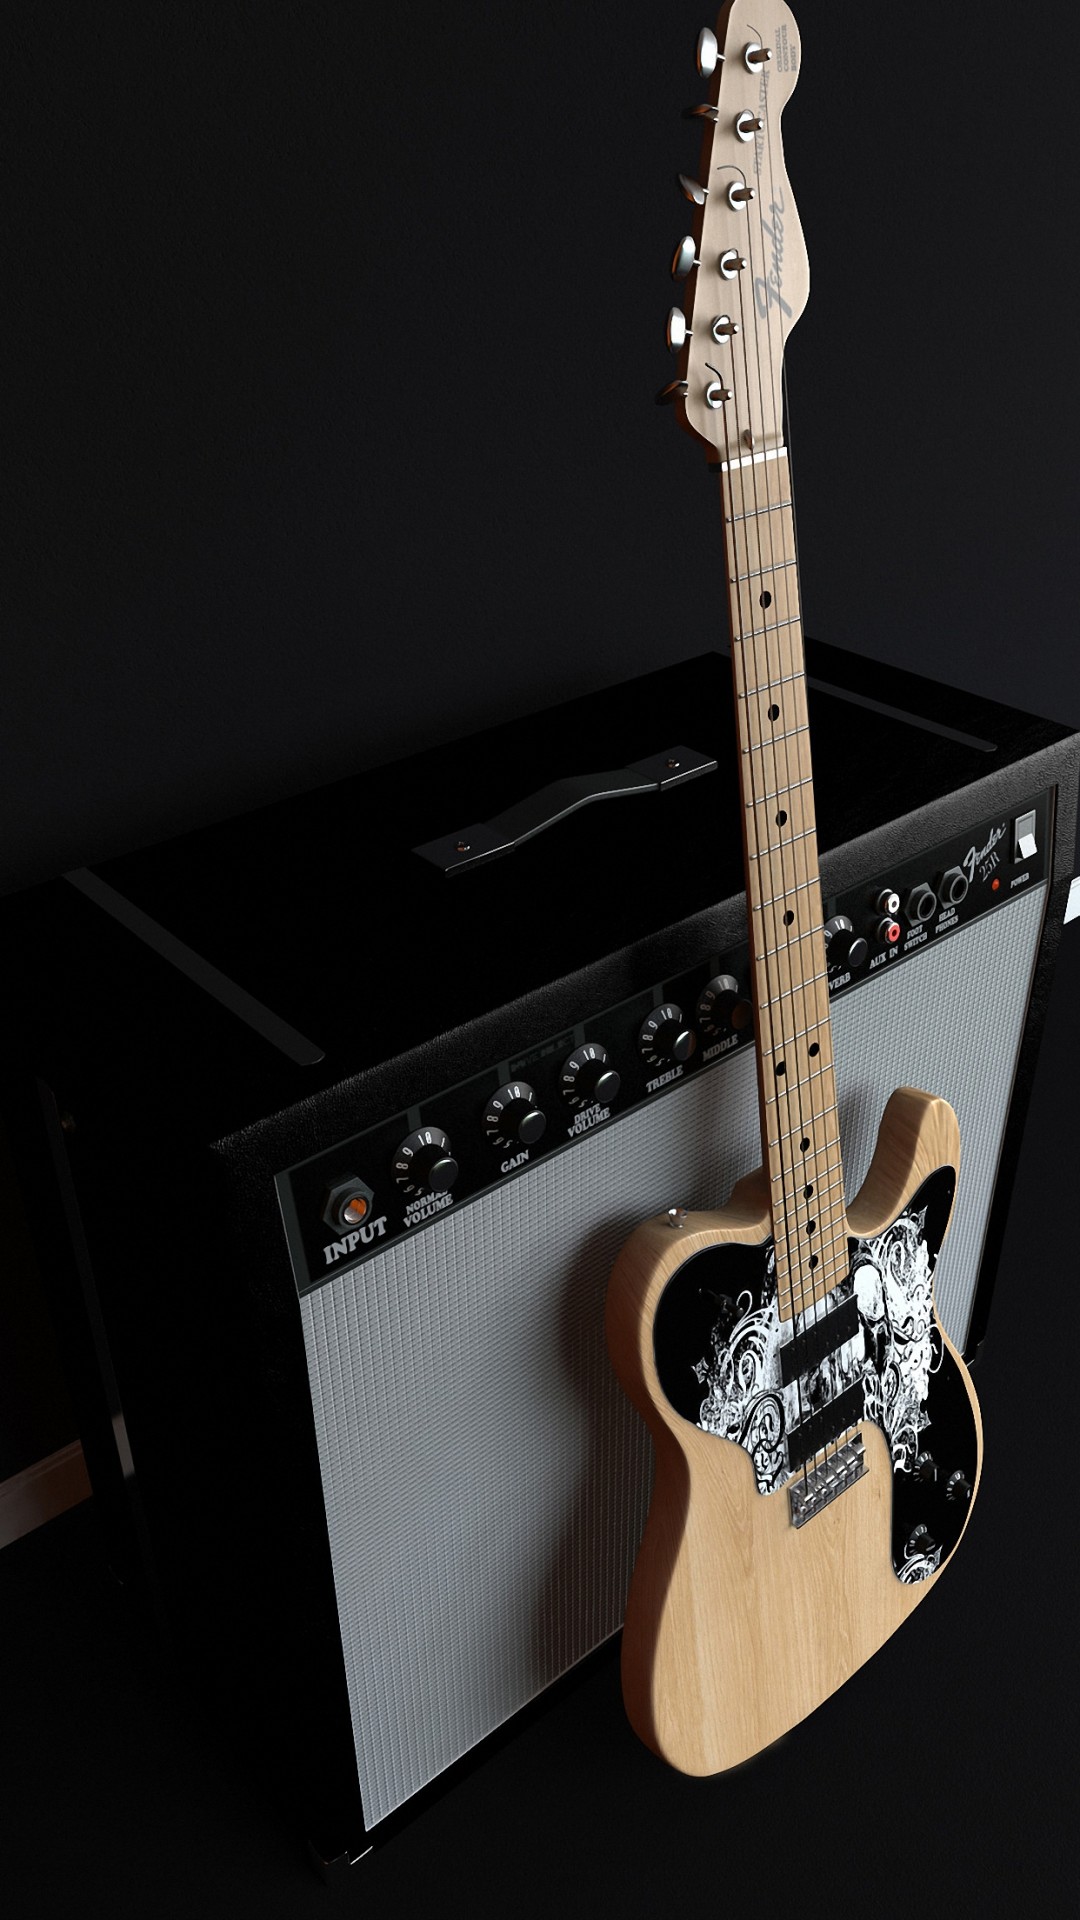 Fender Music Guitar Iphone 6s Wallpapers Hd 
 Data-src - Bass Guitar Iphone 6 - HD Wallpaper 